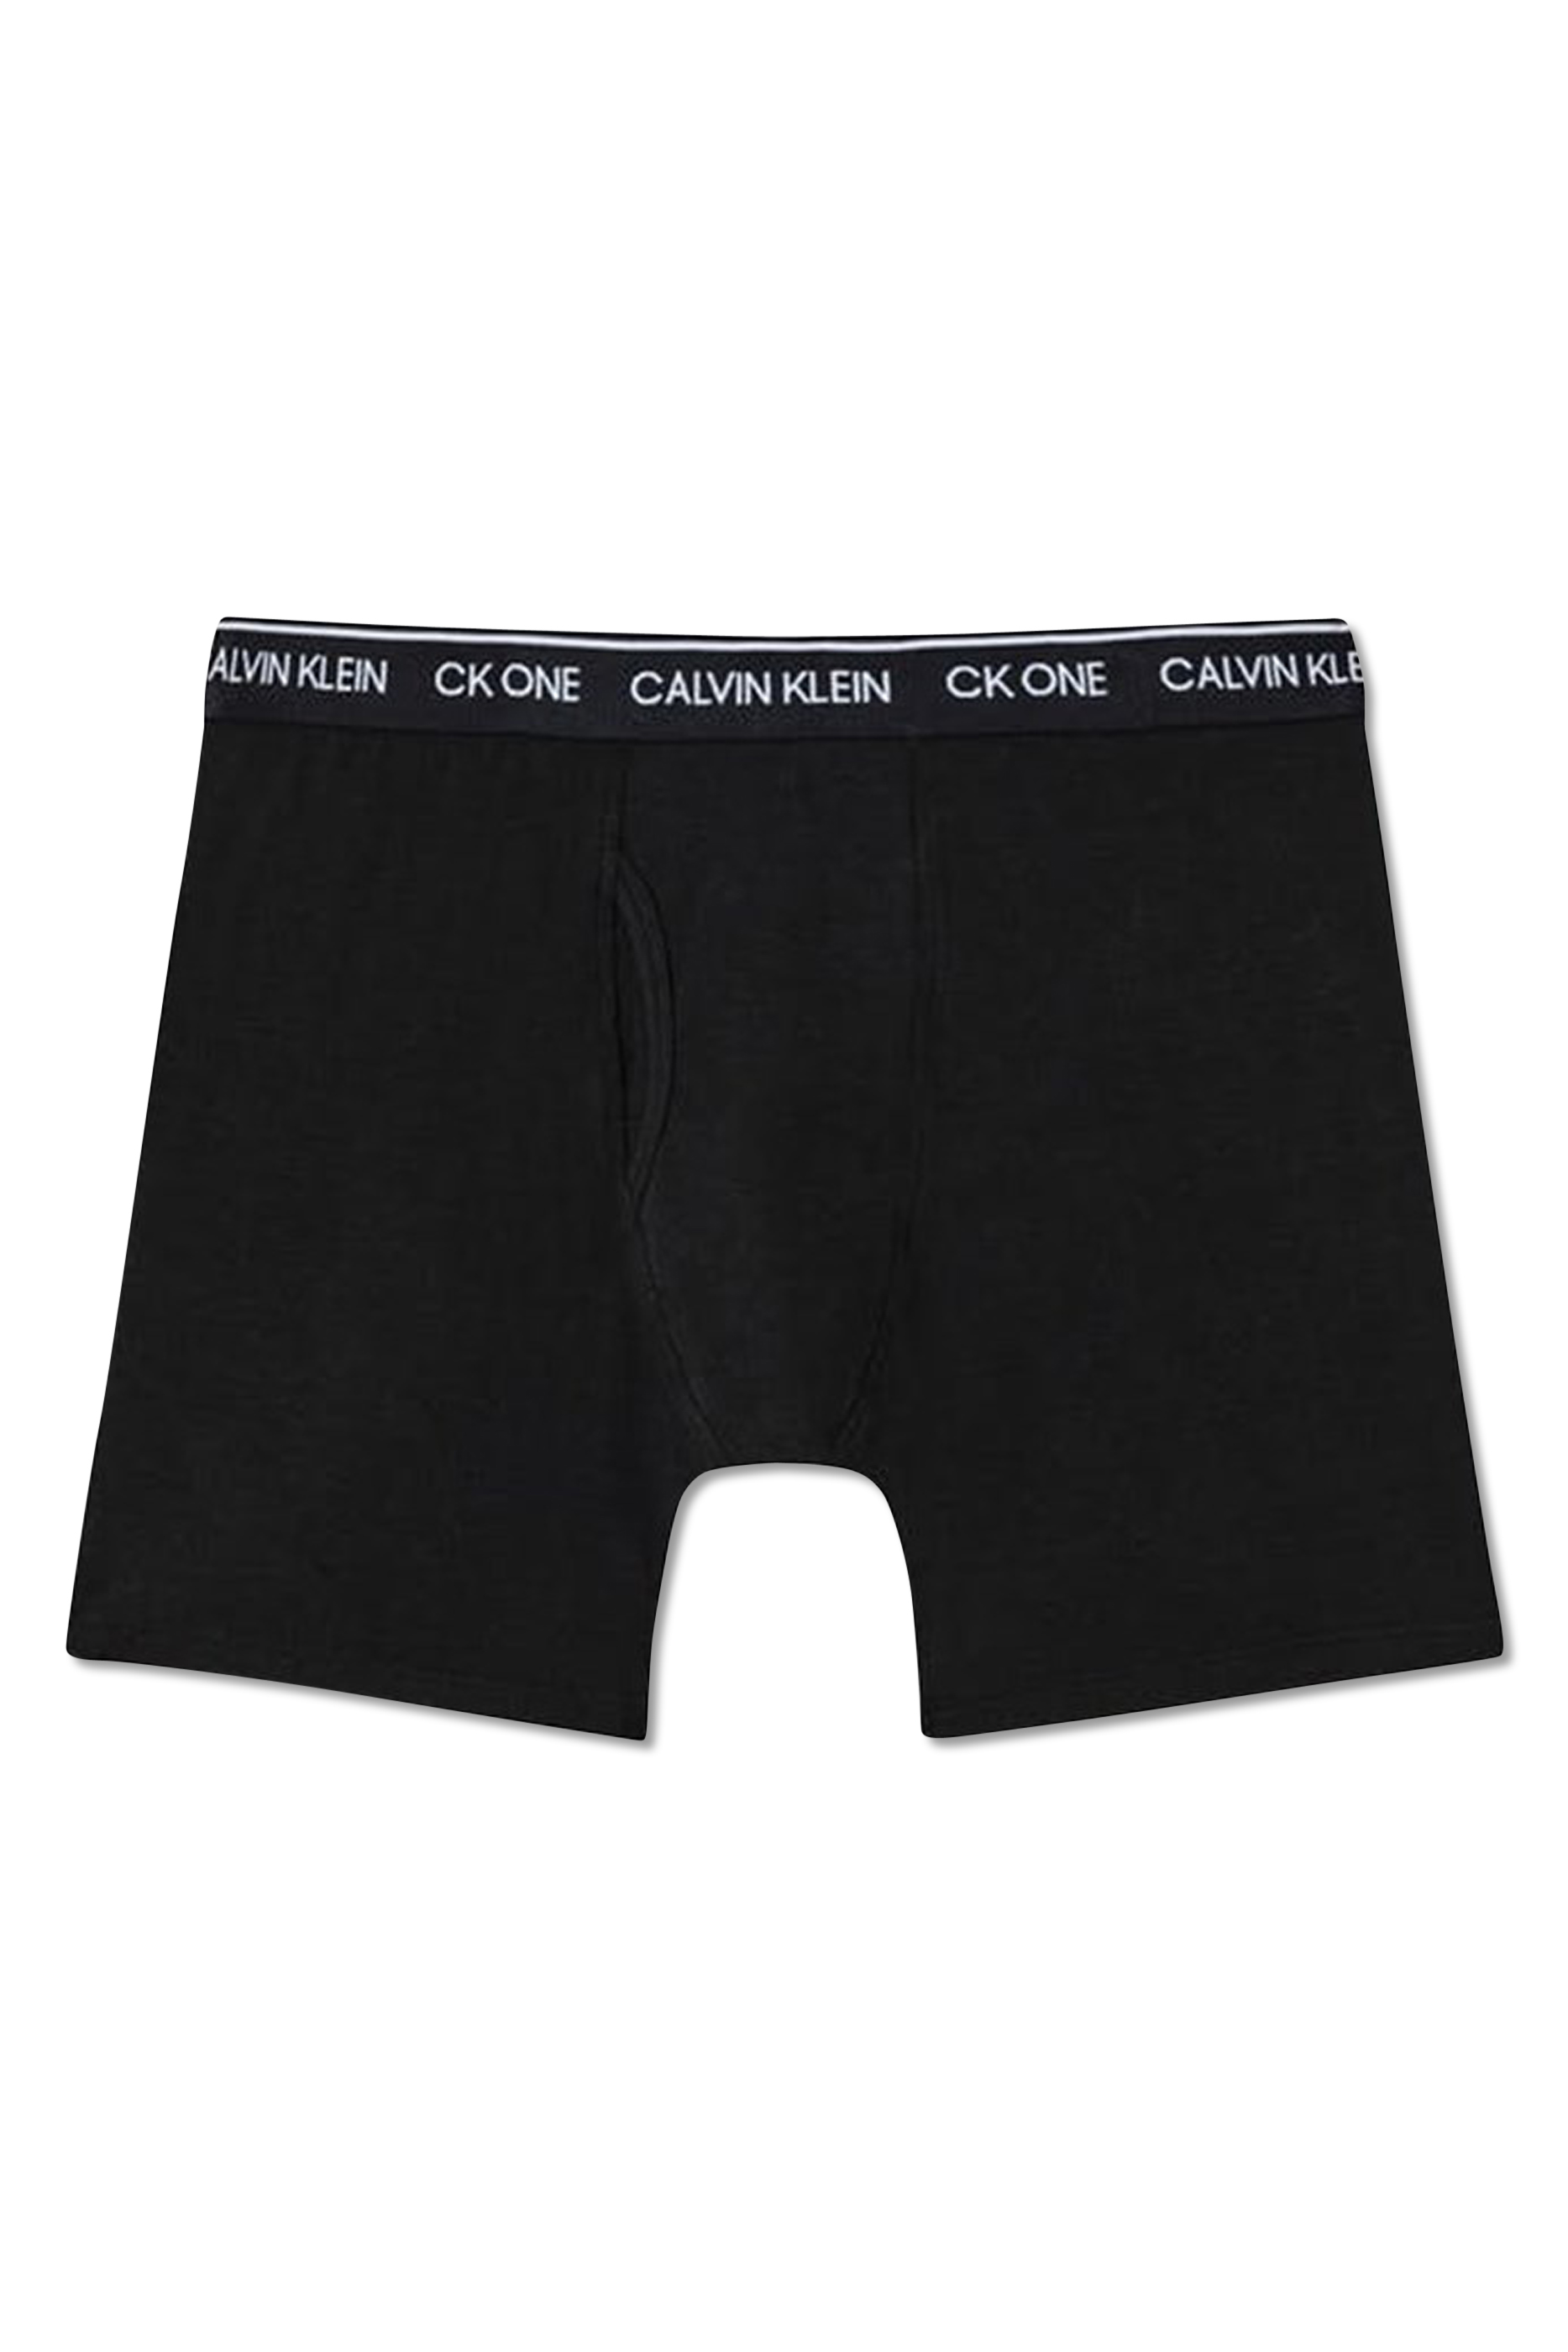 Buy Calvin Klein CK One Cotton Boxer Brief for Mens